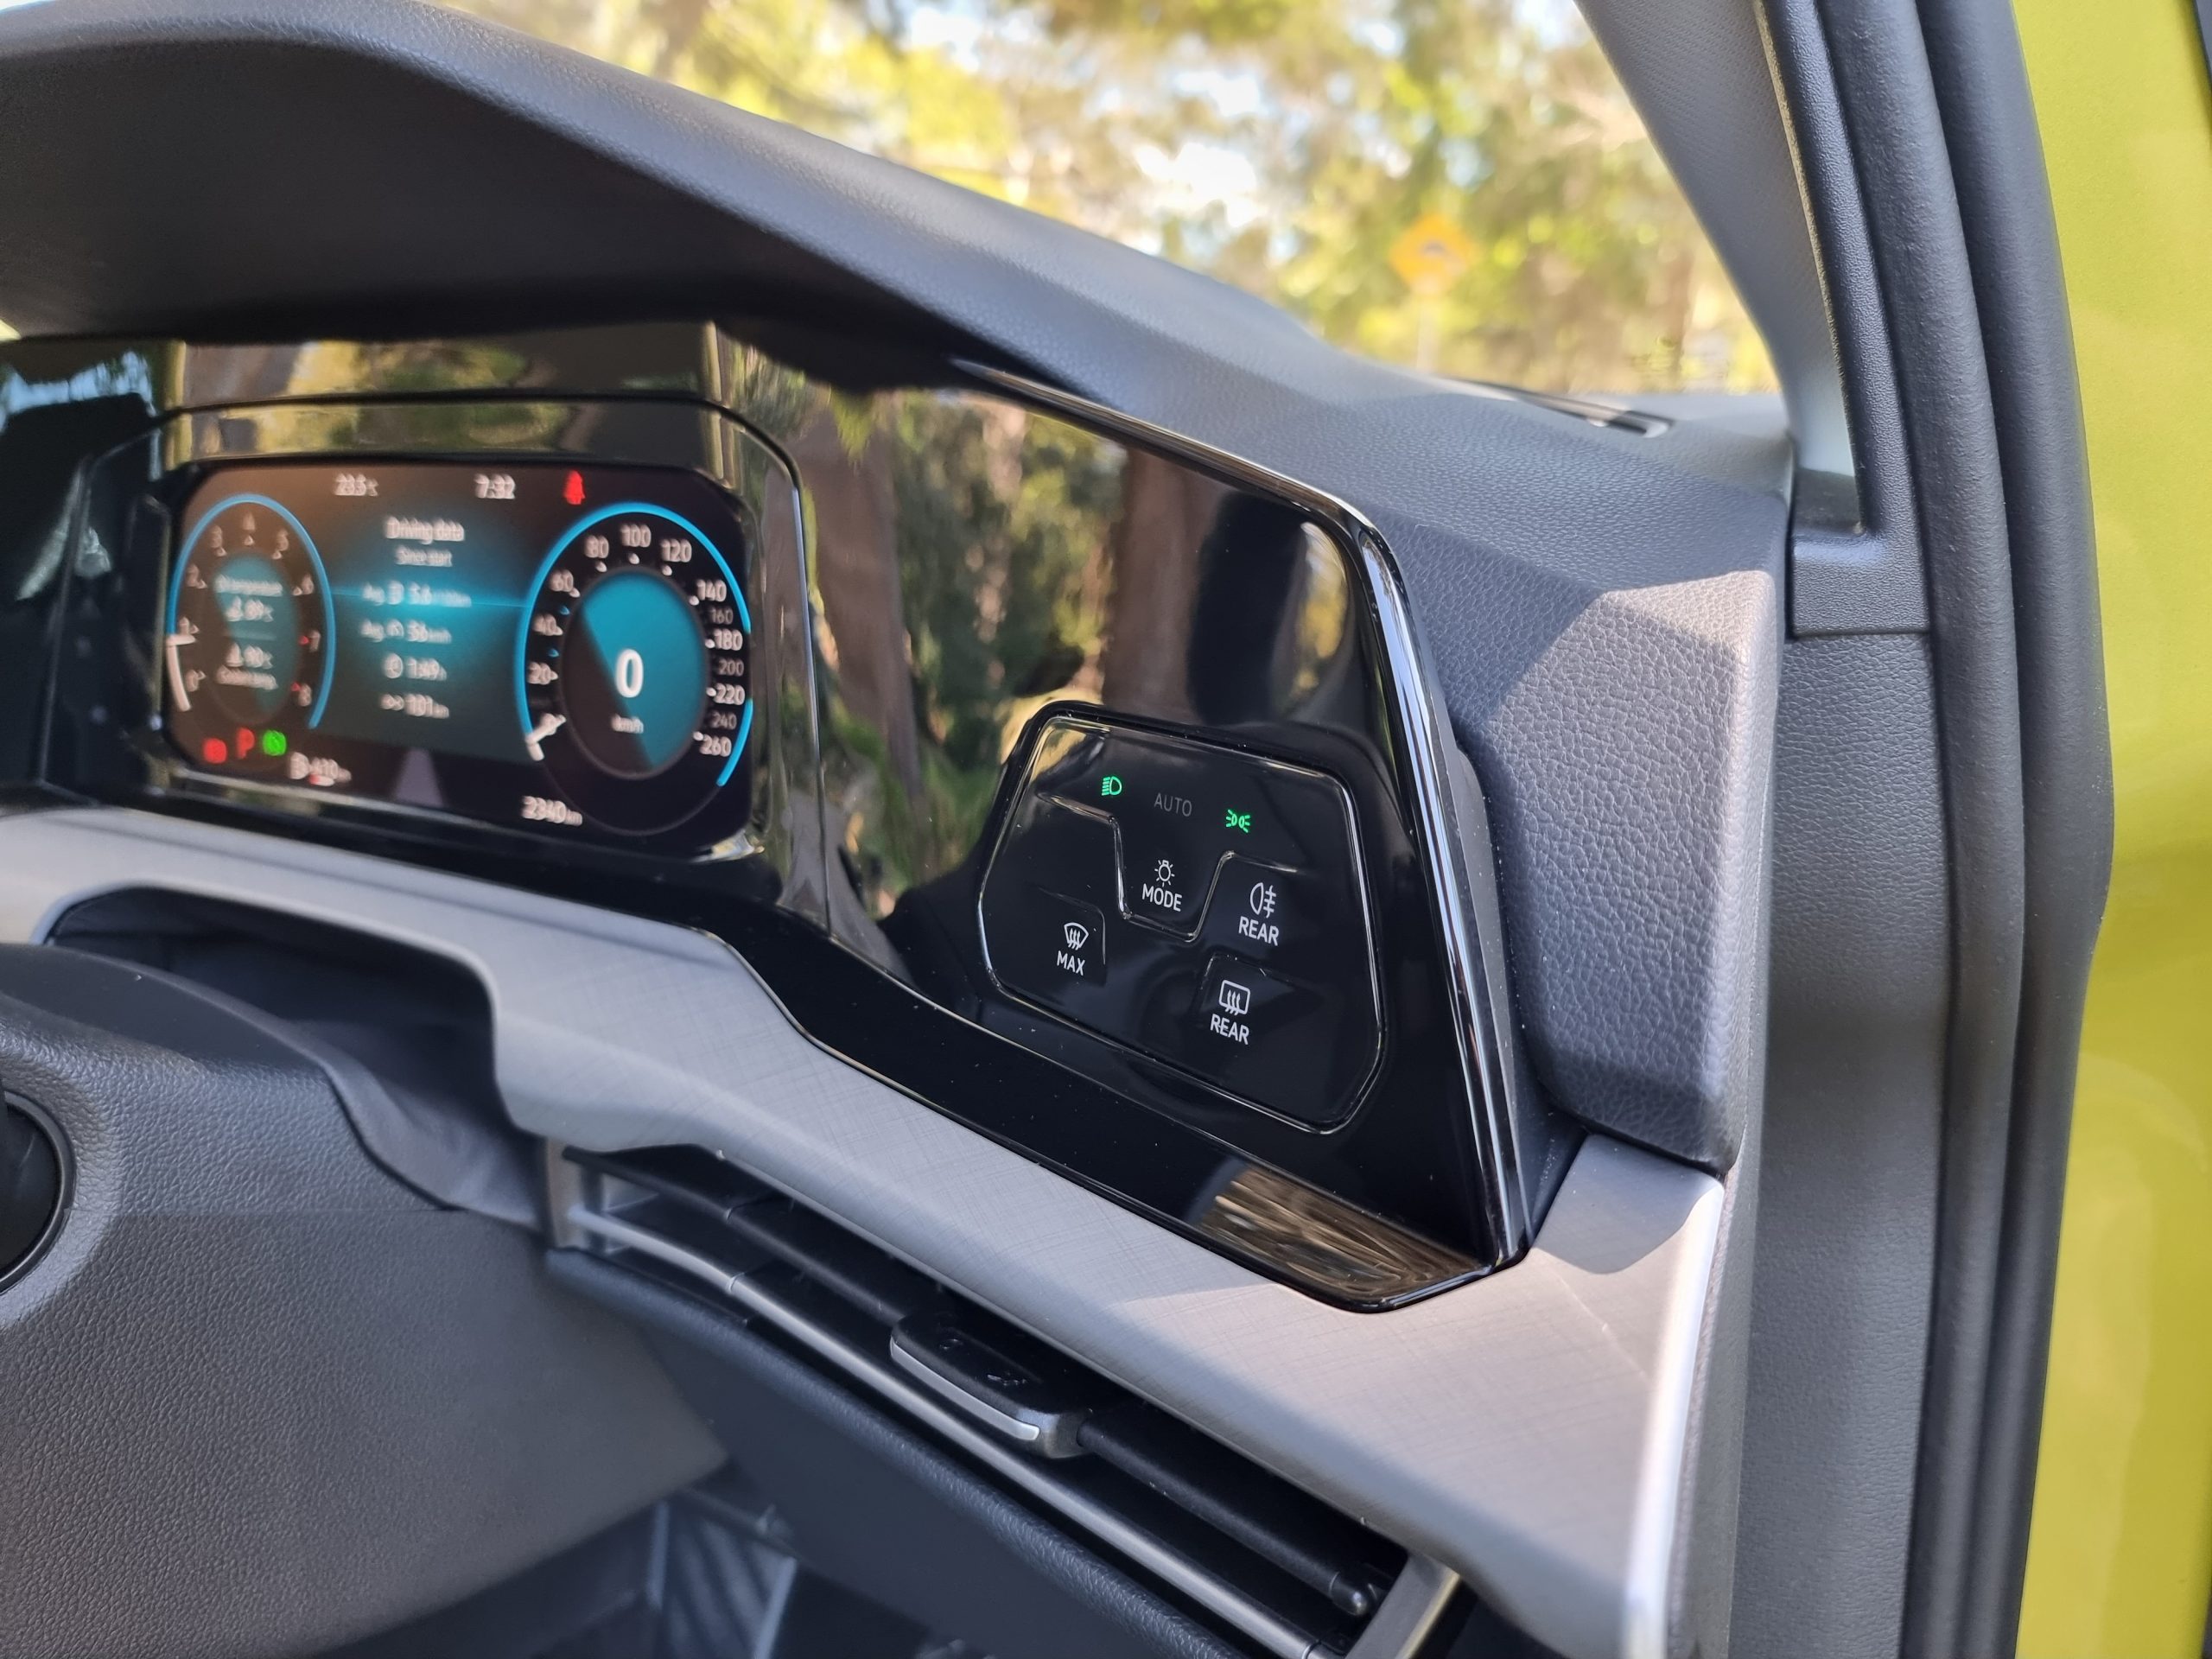 2022 VW Golf Wagon interior